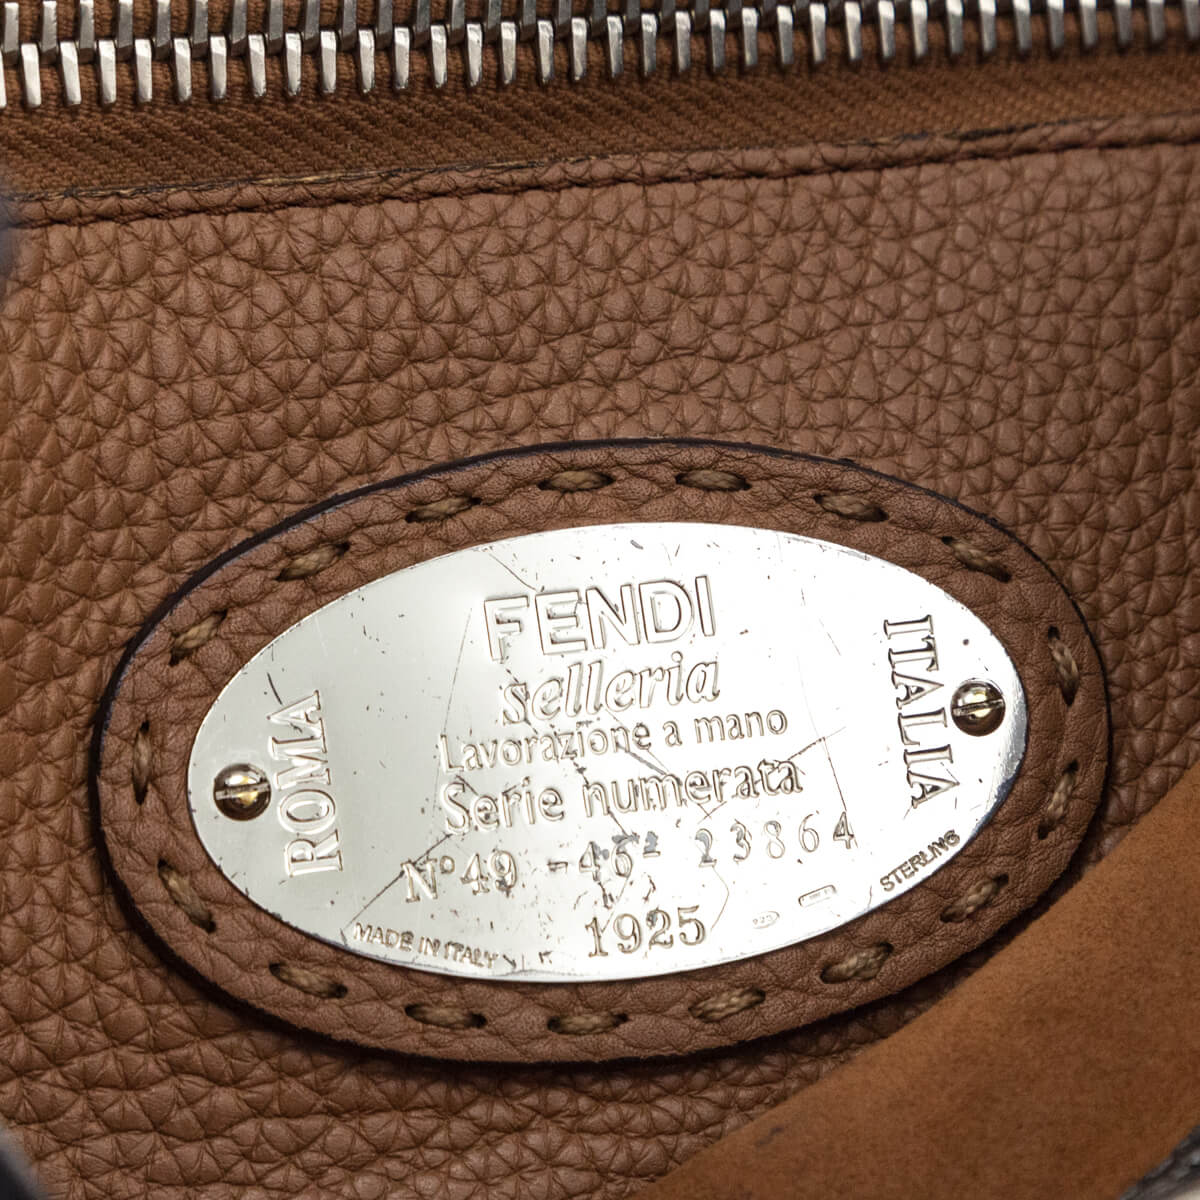 Fendi Black Cuoio Romano Selleria Medium Peekaboo Iconic Satchel - Love that Bag etc - Preowned Authentic Designer Handbags & Preloved Fashions